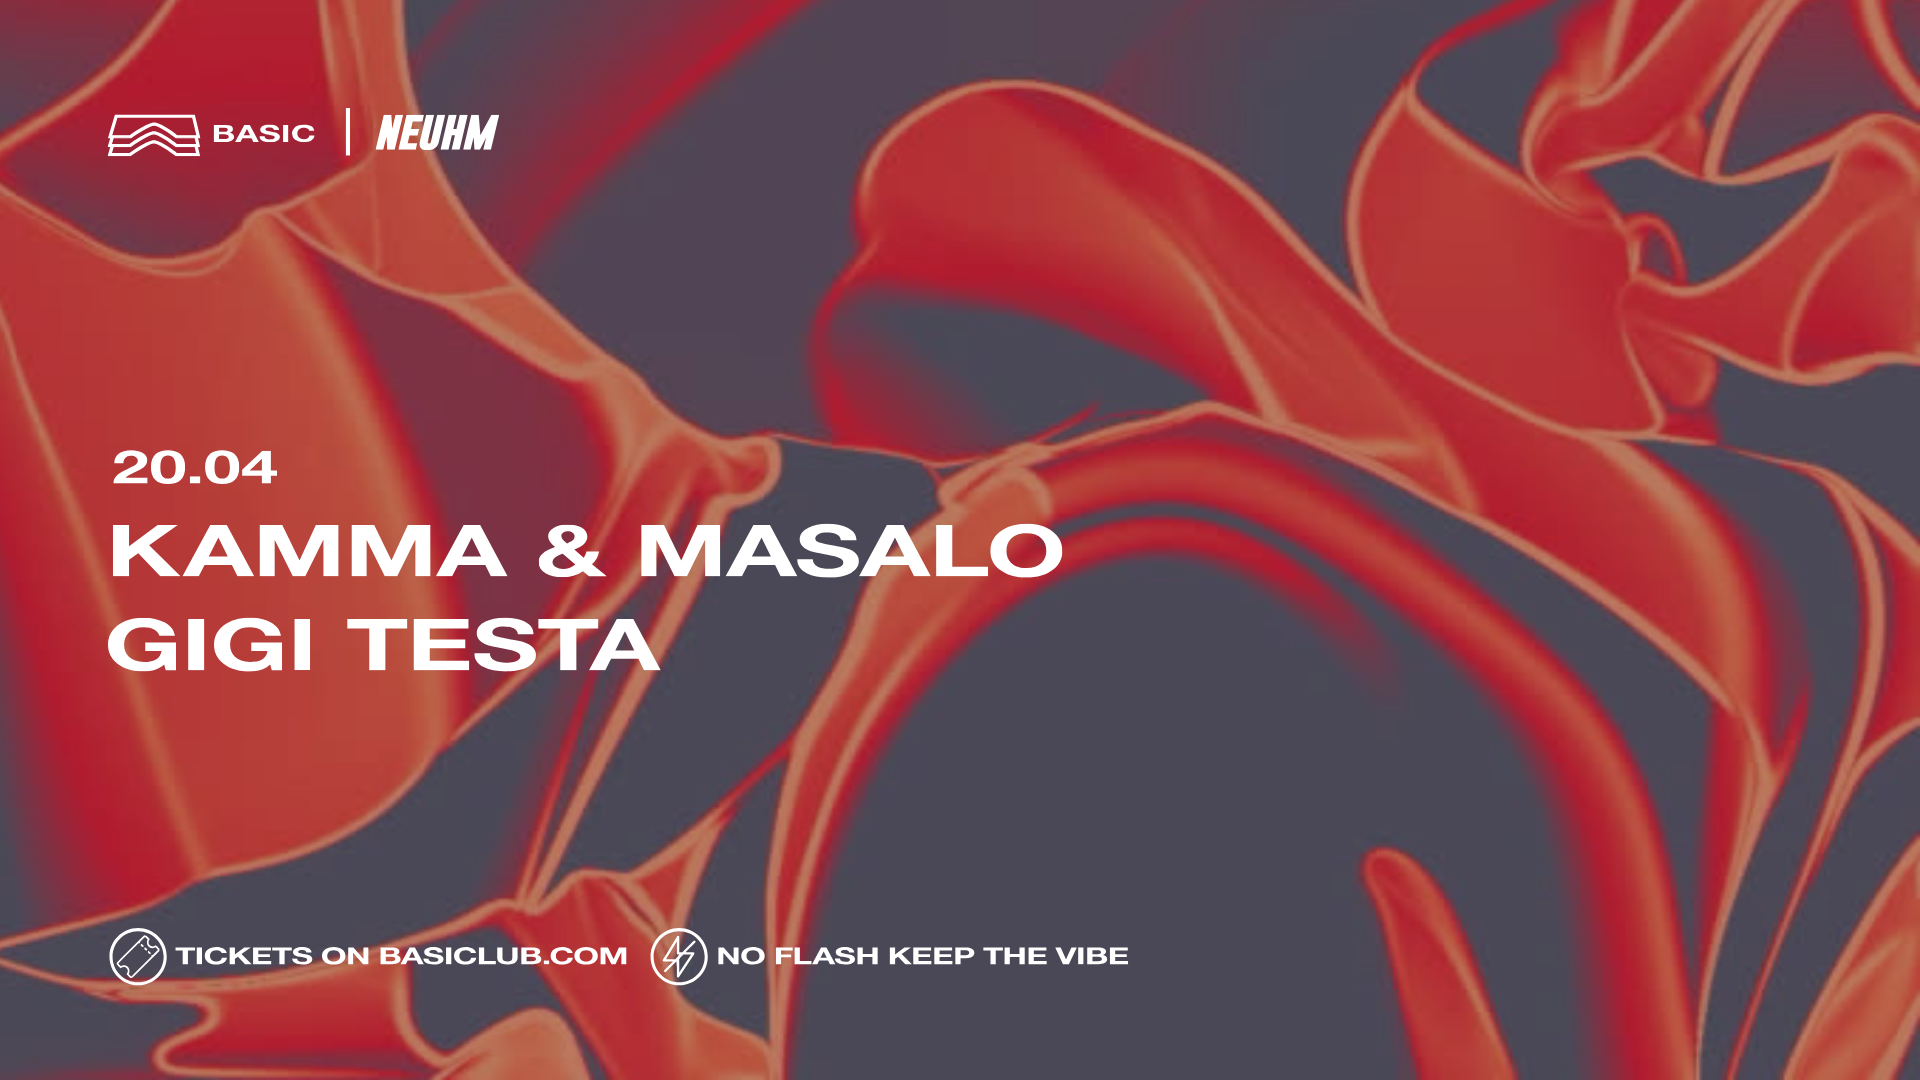 NEUHM • Kamma & Masalo + Gigi Testa - フライヤー表